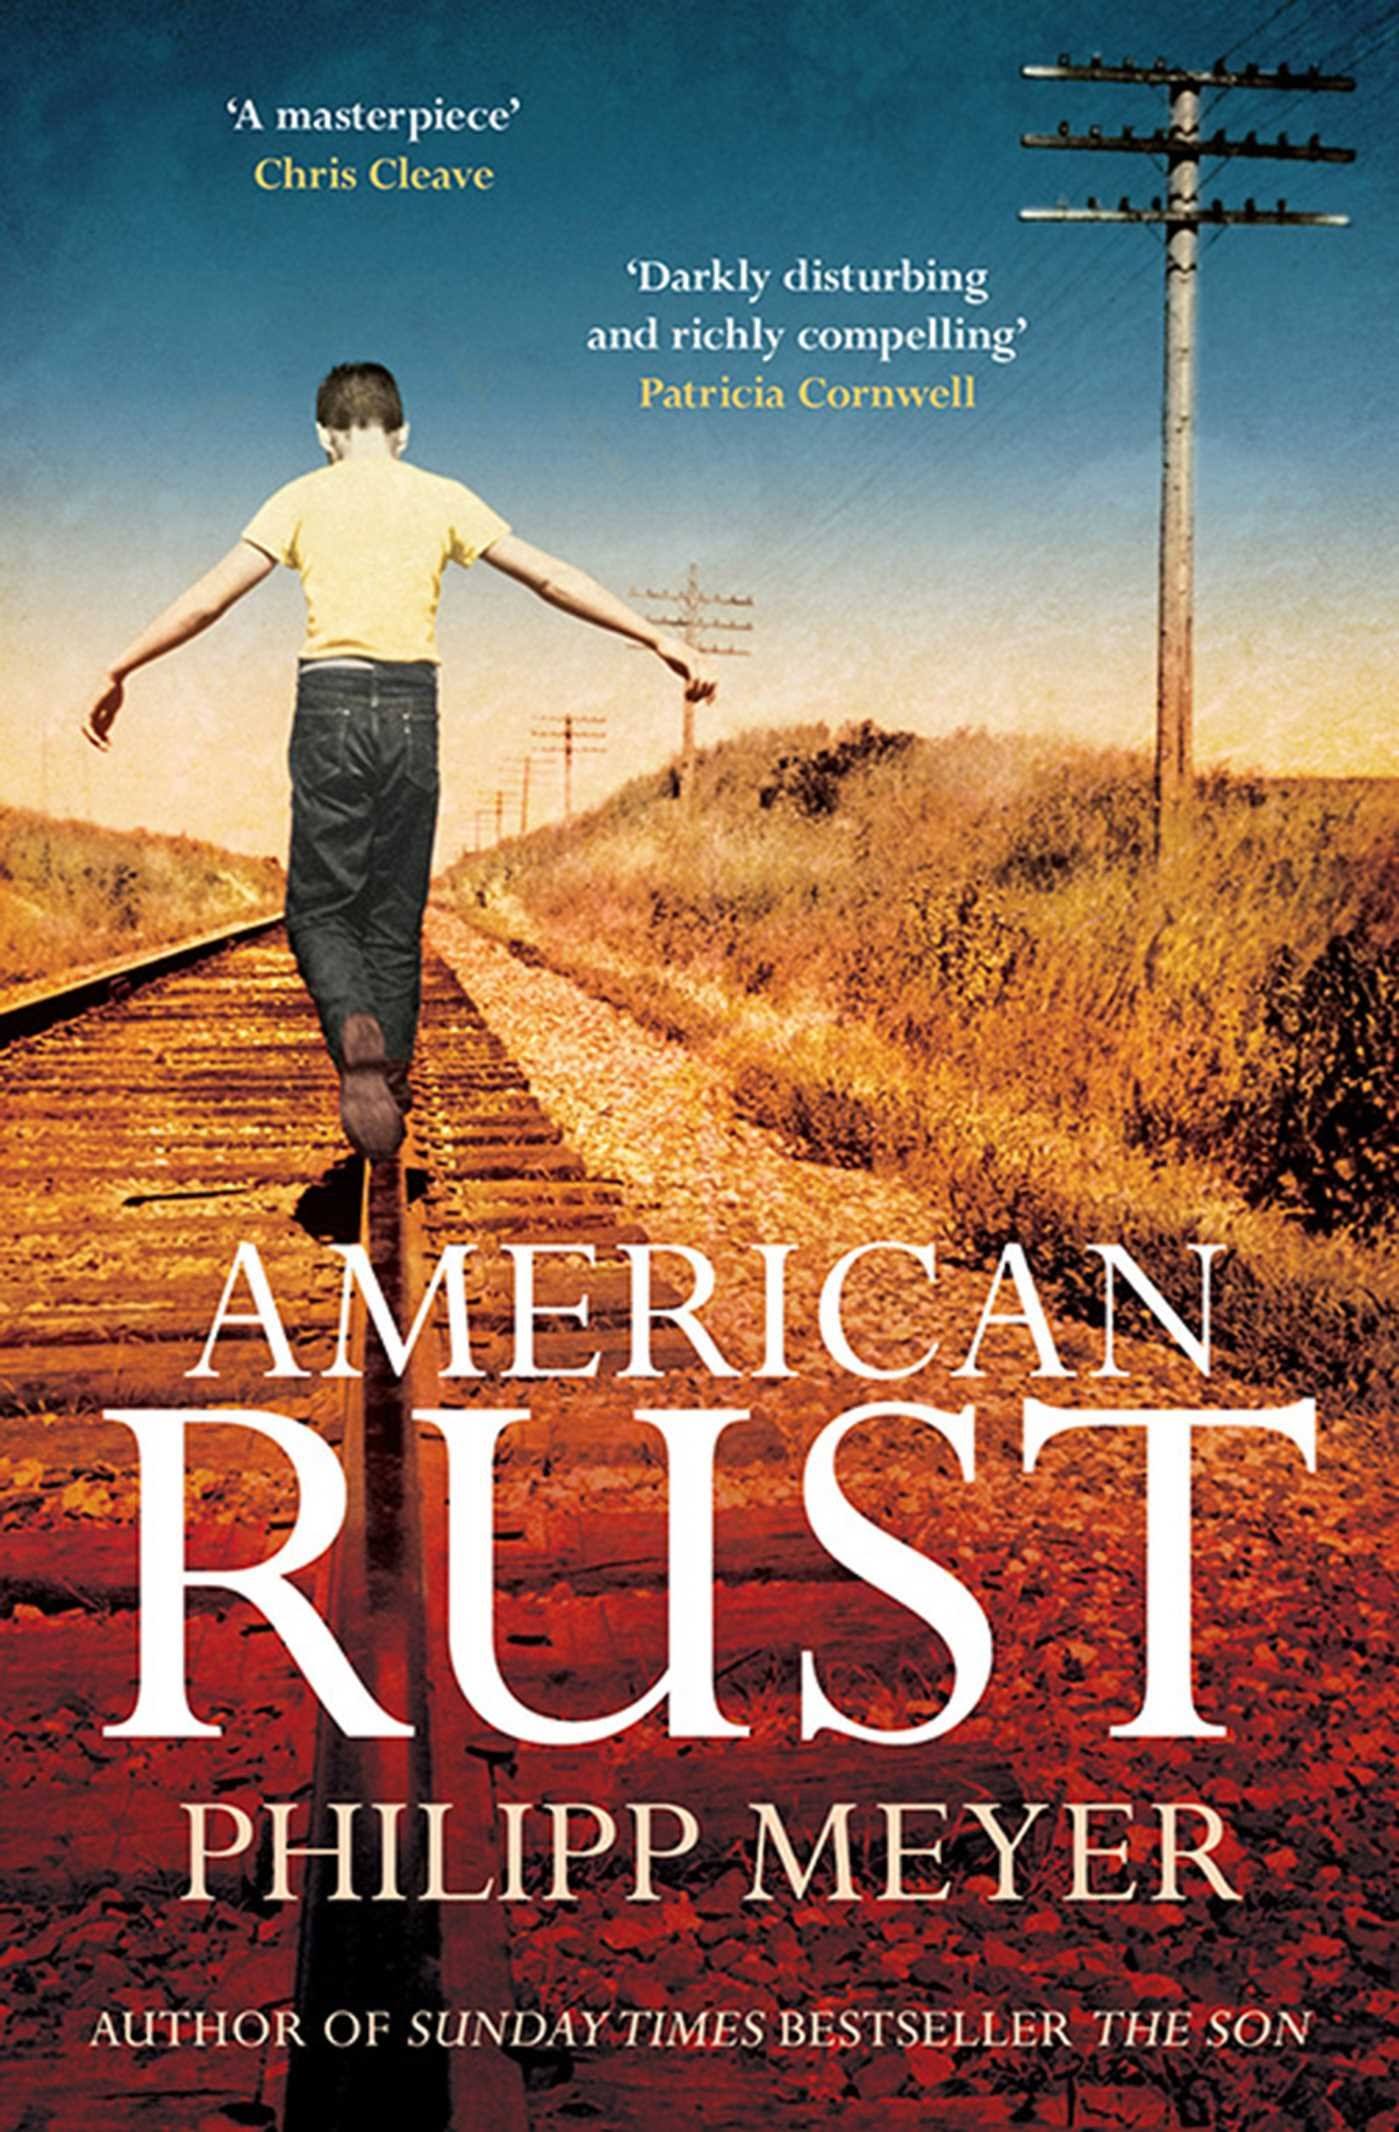 American Rust - Philipp Meyer